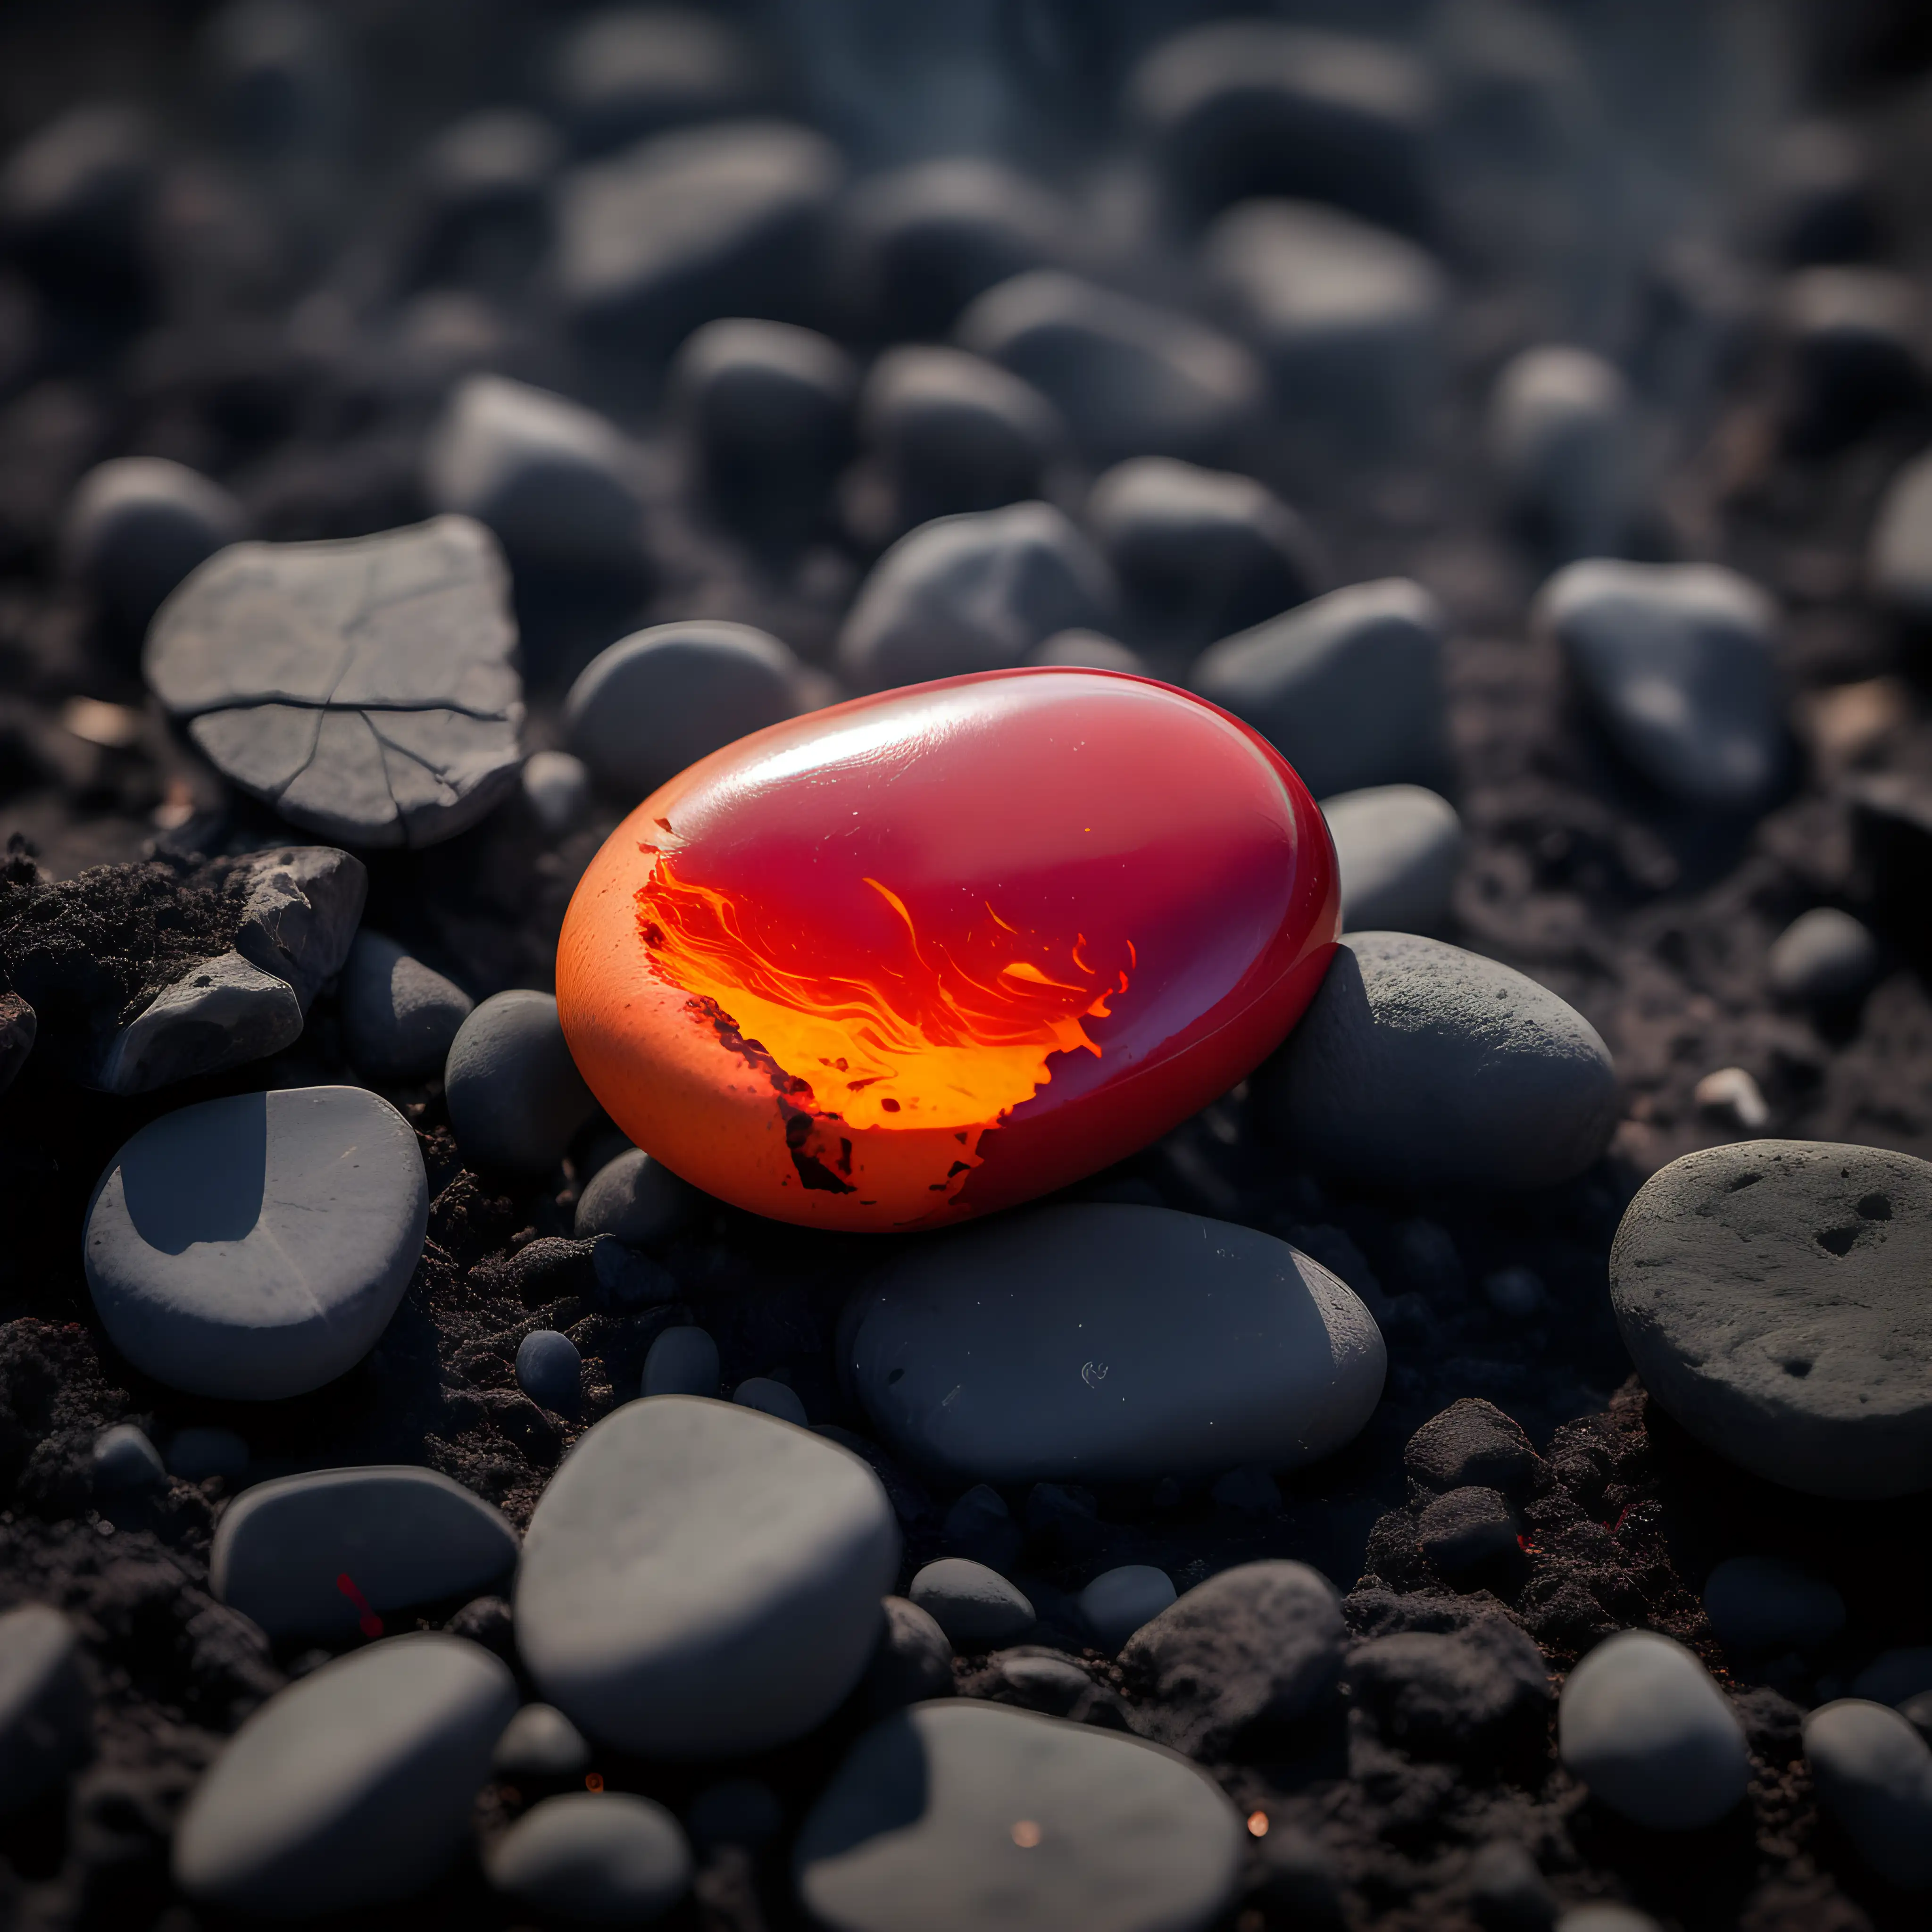 Crimson and Orange Pebble in a Fiery Field